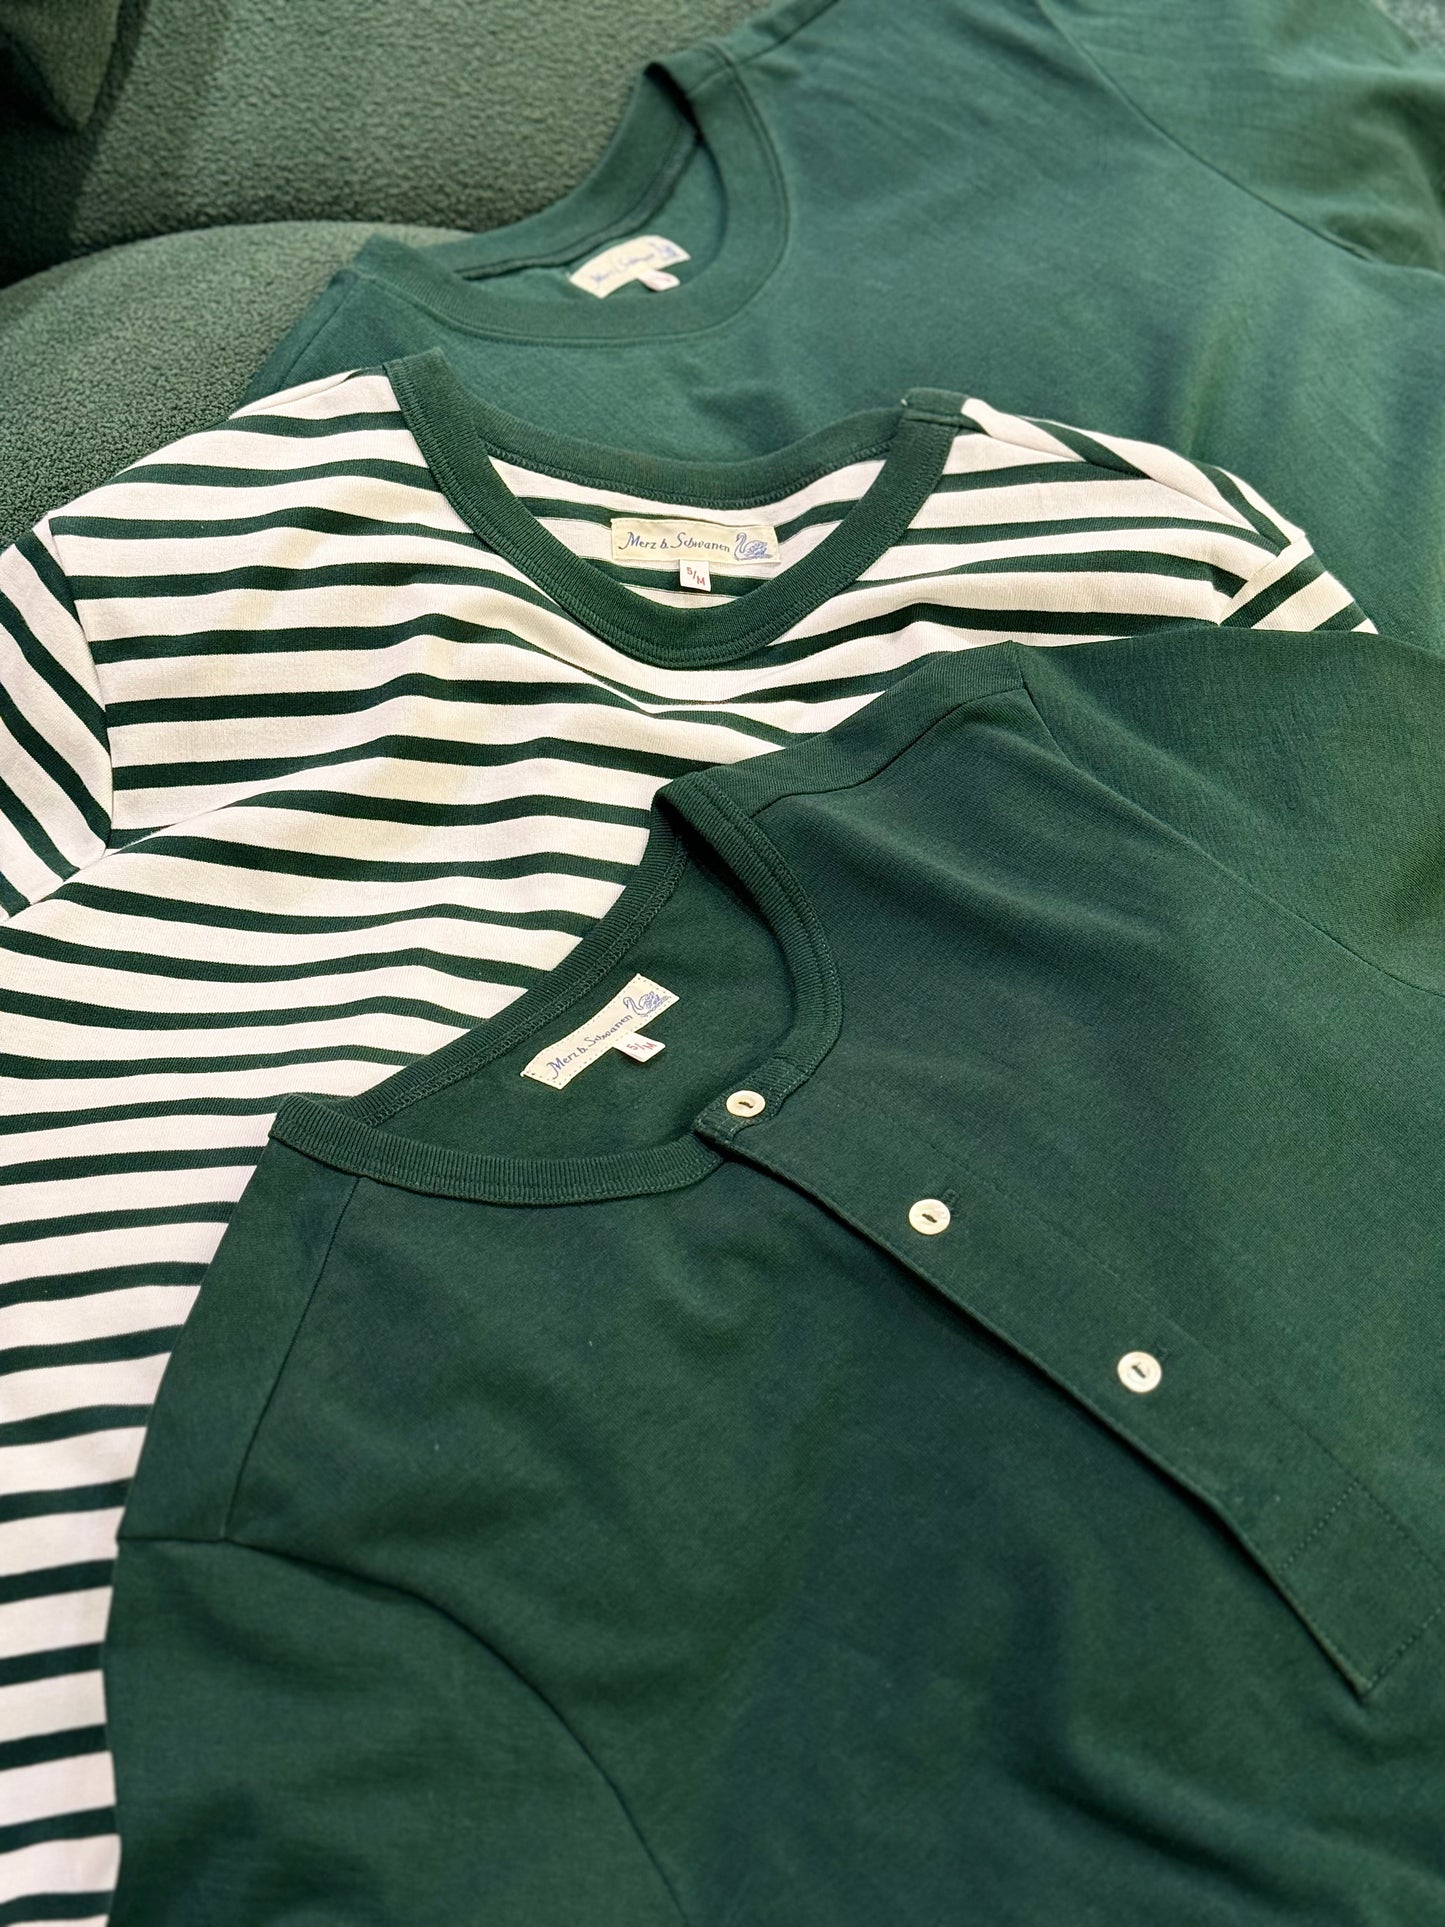 MZB Men'S 2M14 Striped Relaxed T-Shirt 7.9oz Green/ White